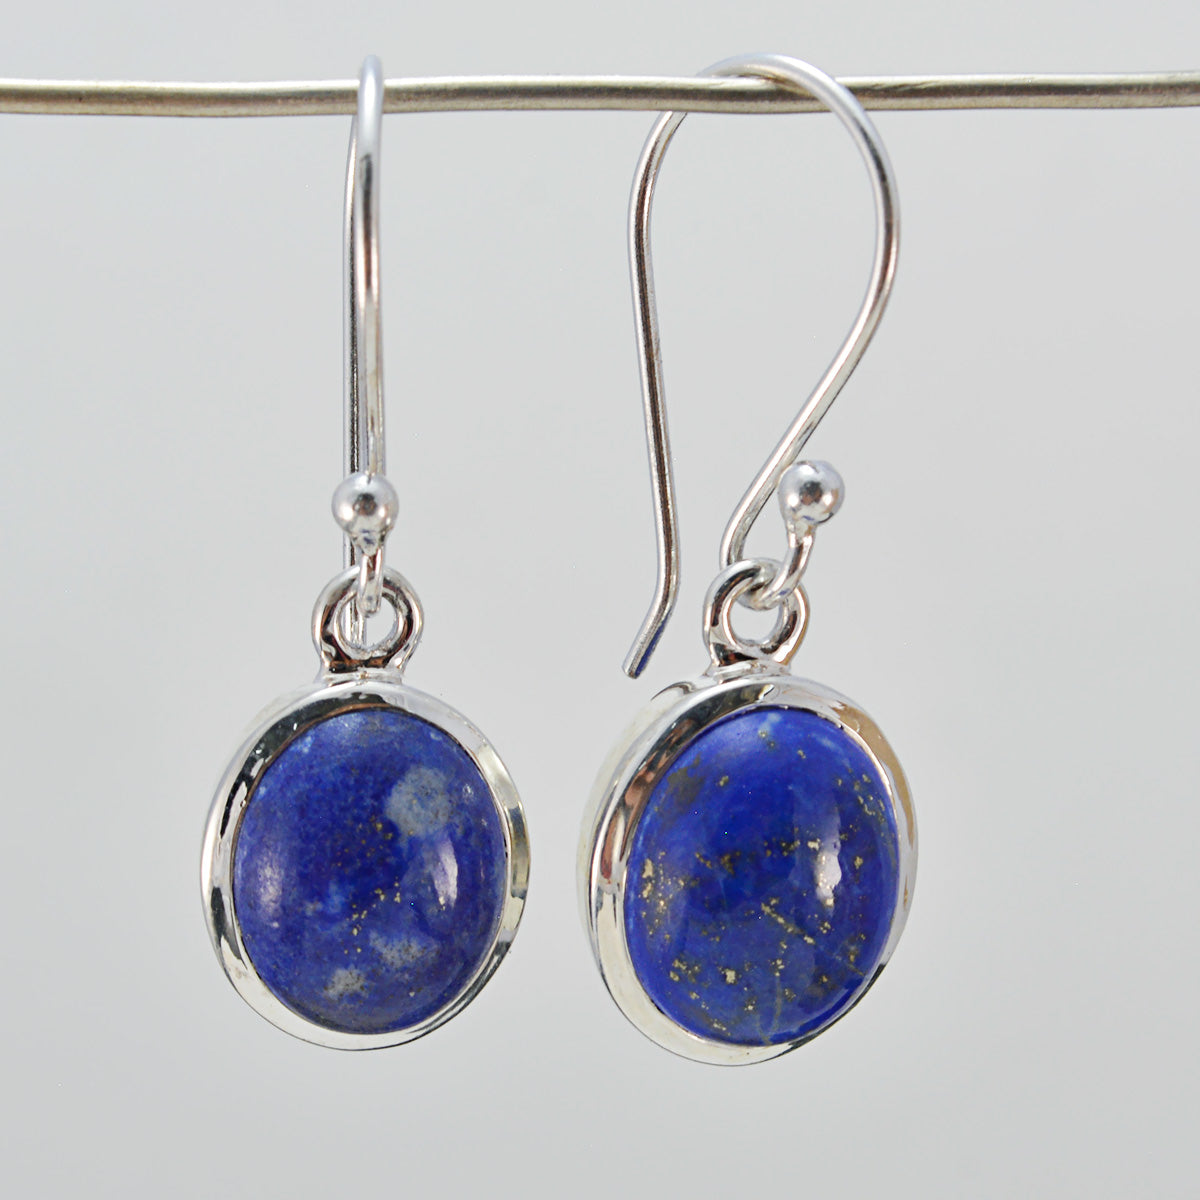 Riyo Nice Gemstone round Cabochon Nevy Blue Lapis Lazuli Silver Earrings college graduation